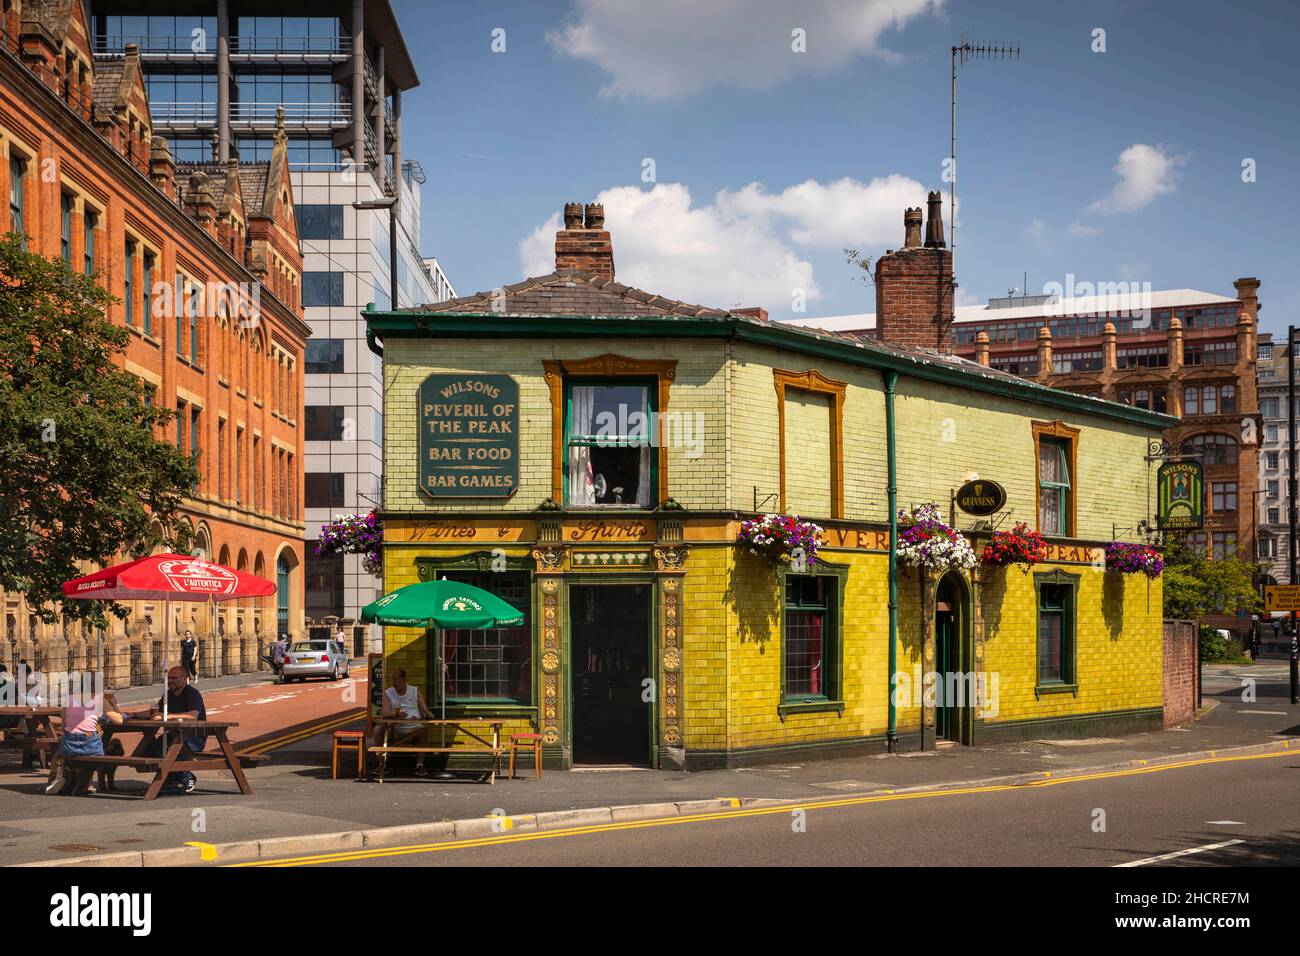 UK, England, Manchester, Great Bridgewater Street, Peveril of the Peak, historic tiled pub Stock Photo